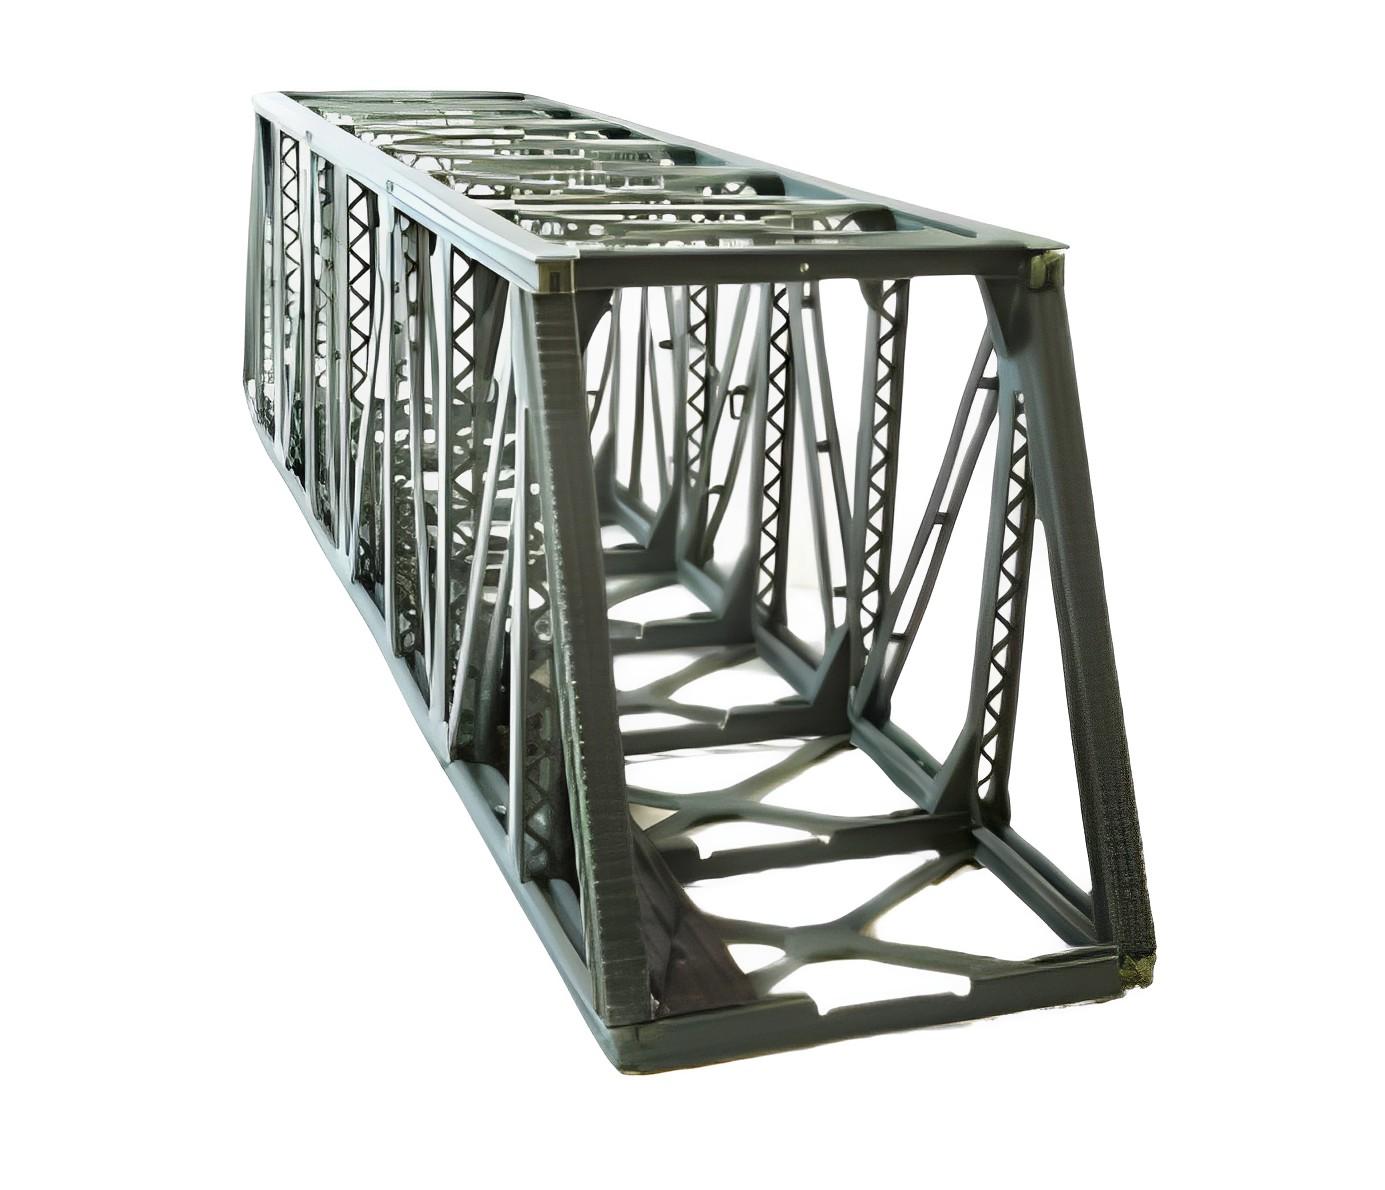 Generic Steel Plate Type Girder Bridge_0